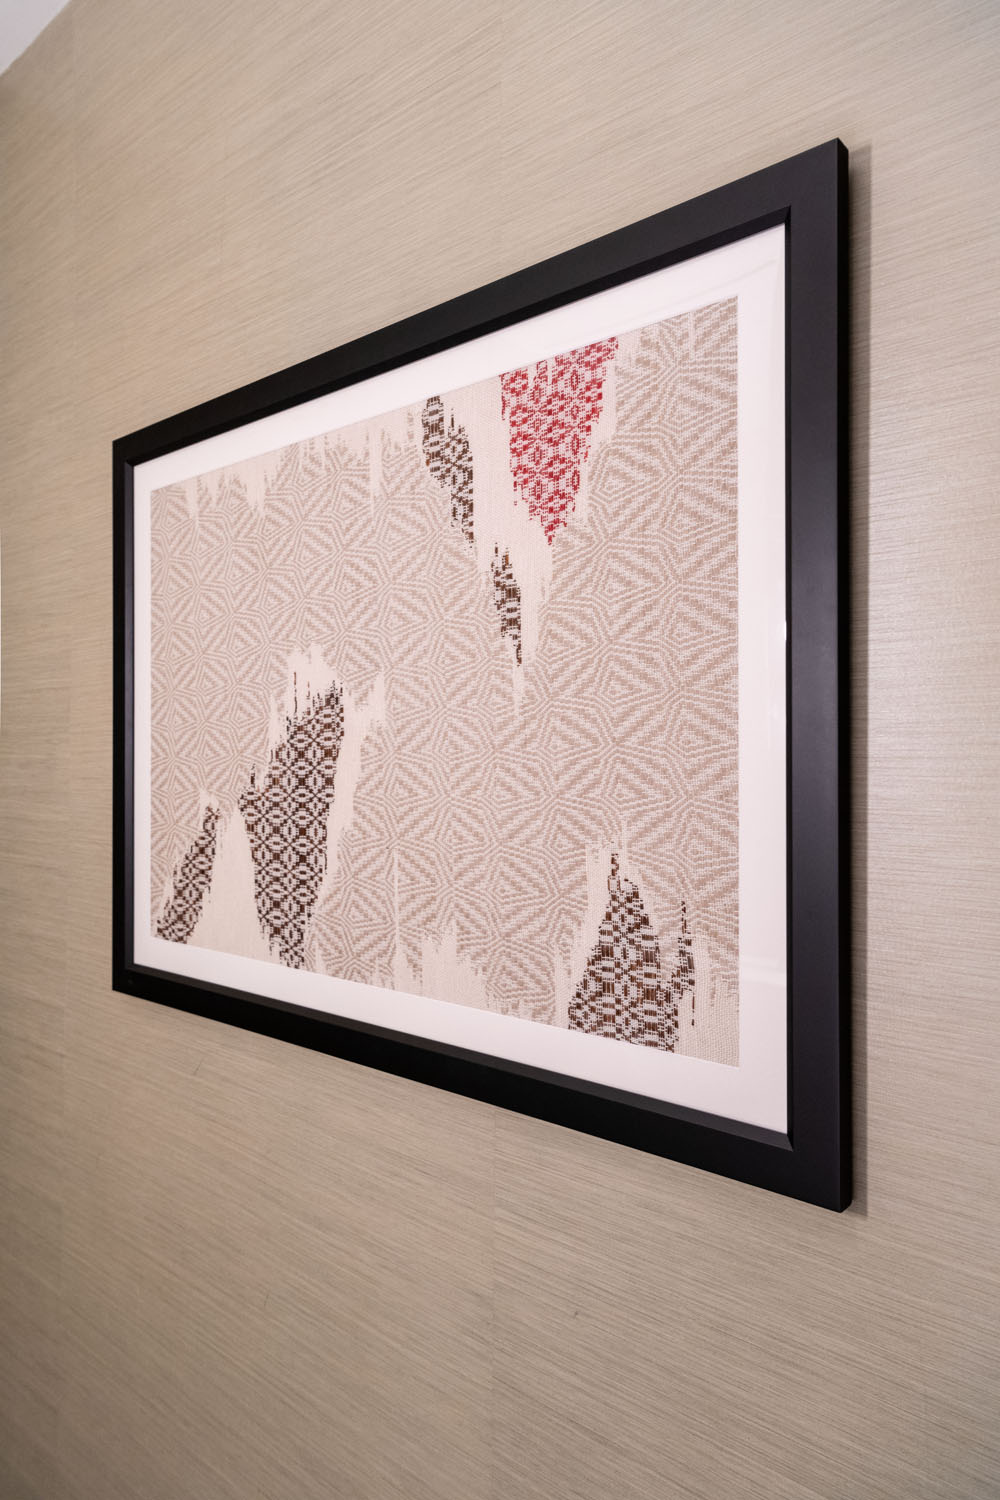 The Star Sydney - hotel bathroom - Hannah Cooper textile artwork